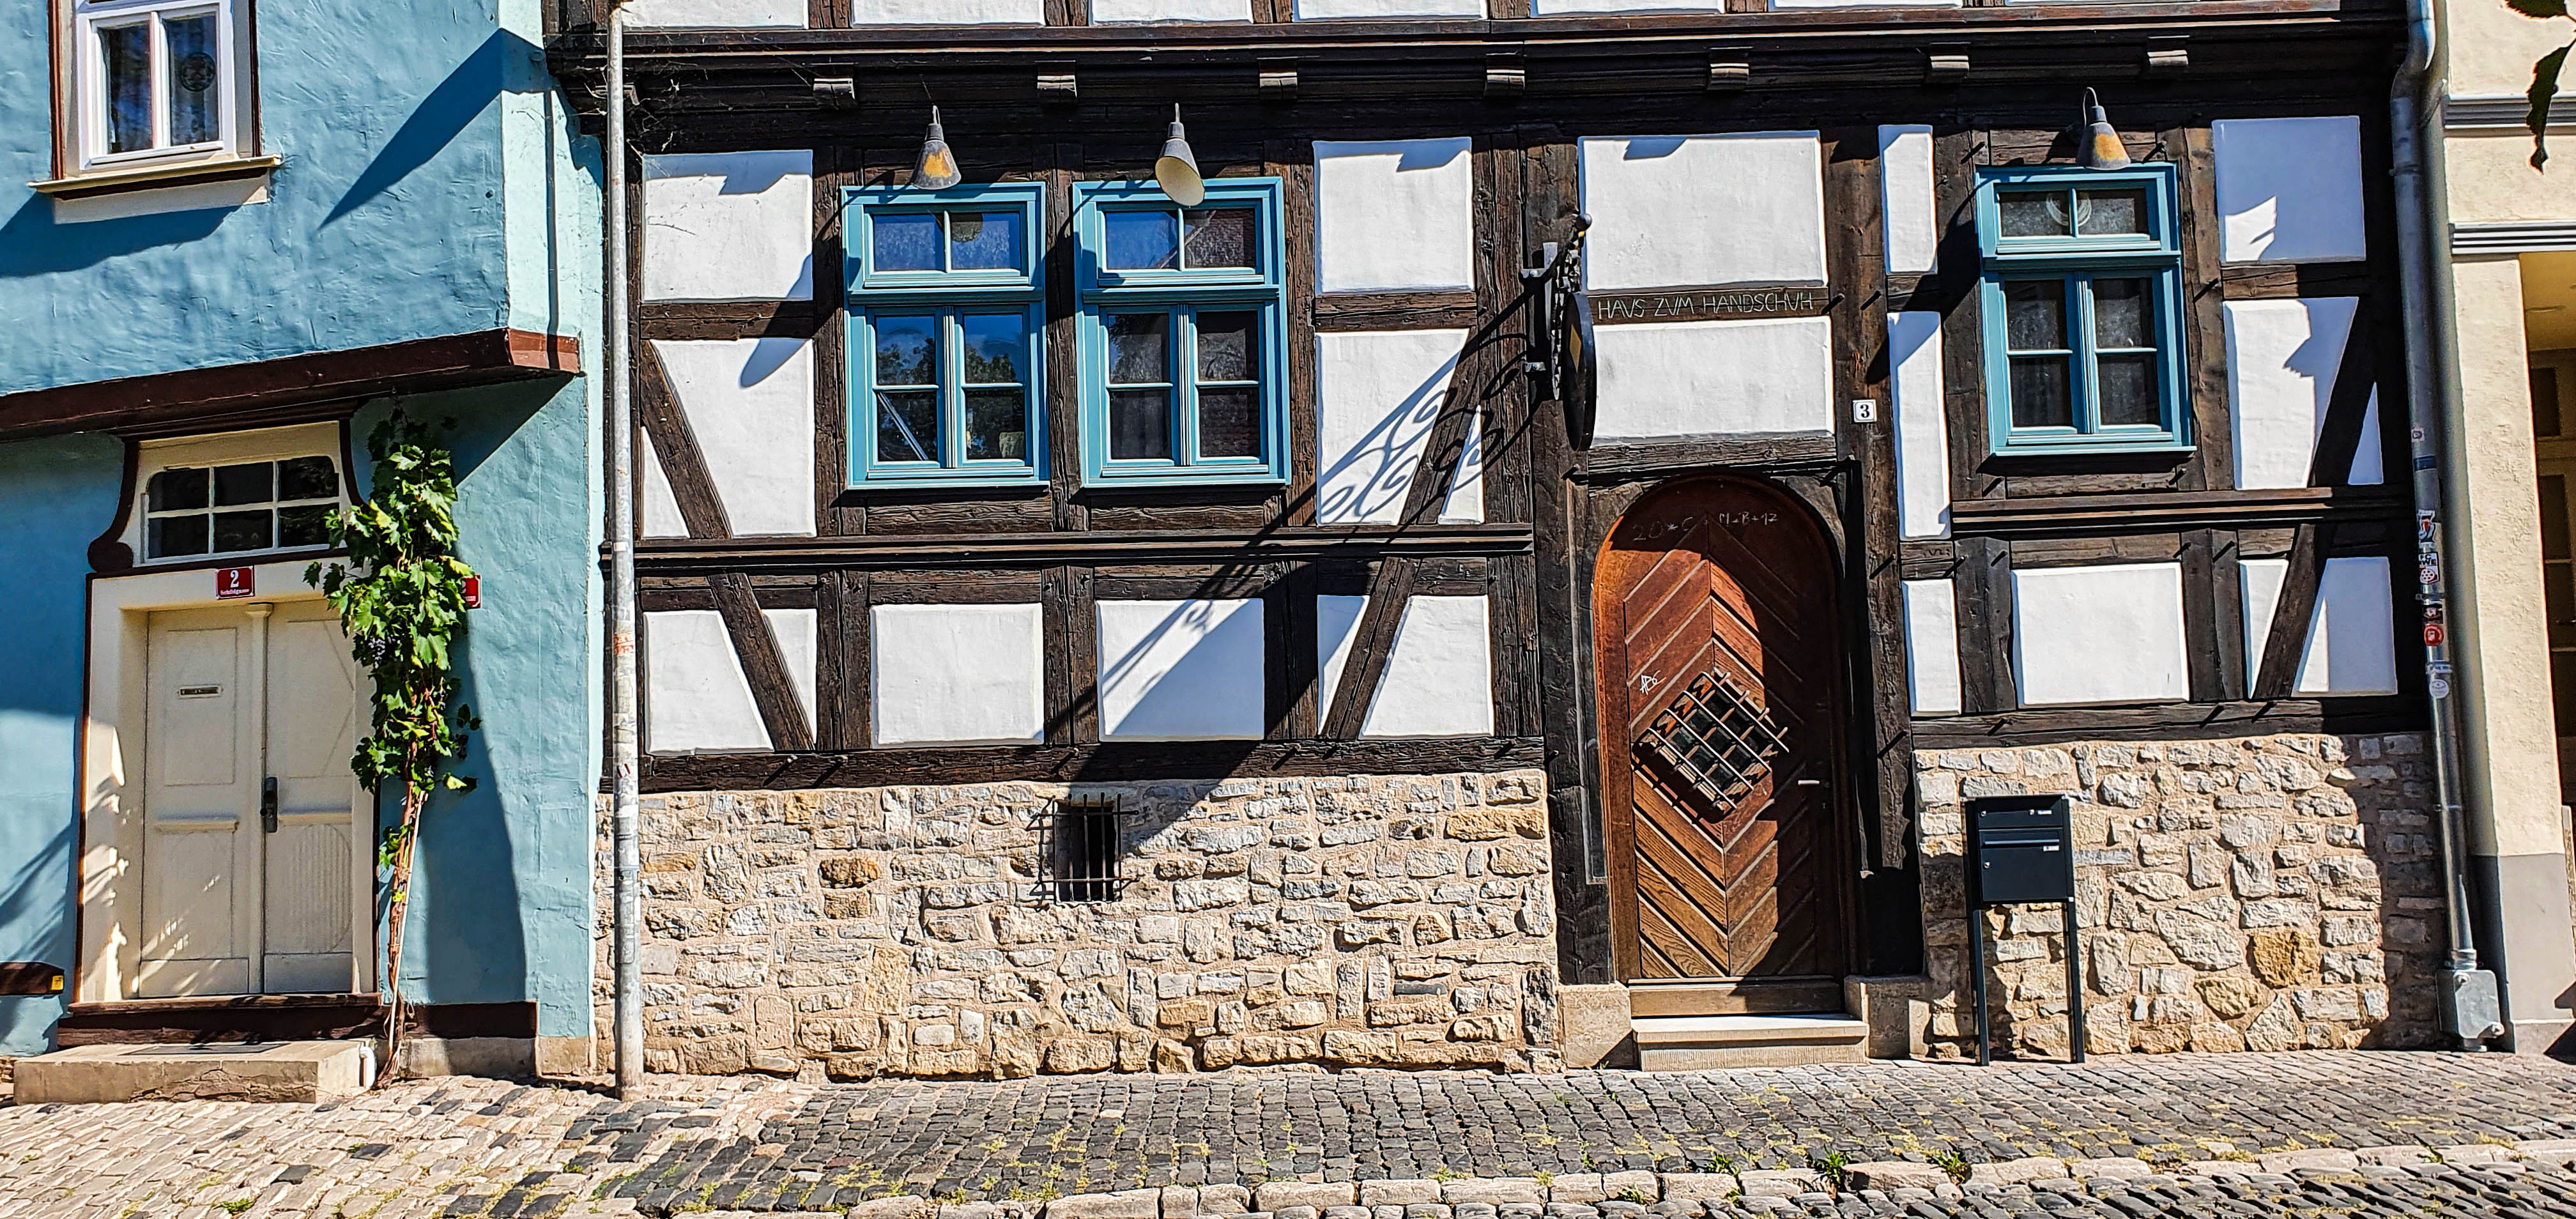 gerenoveerd vakwerkhuis met blauwe ramen in Erfurt